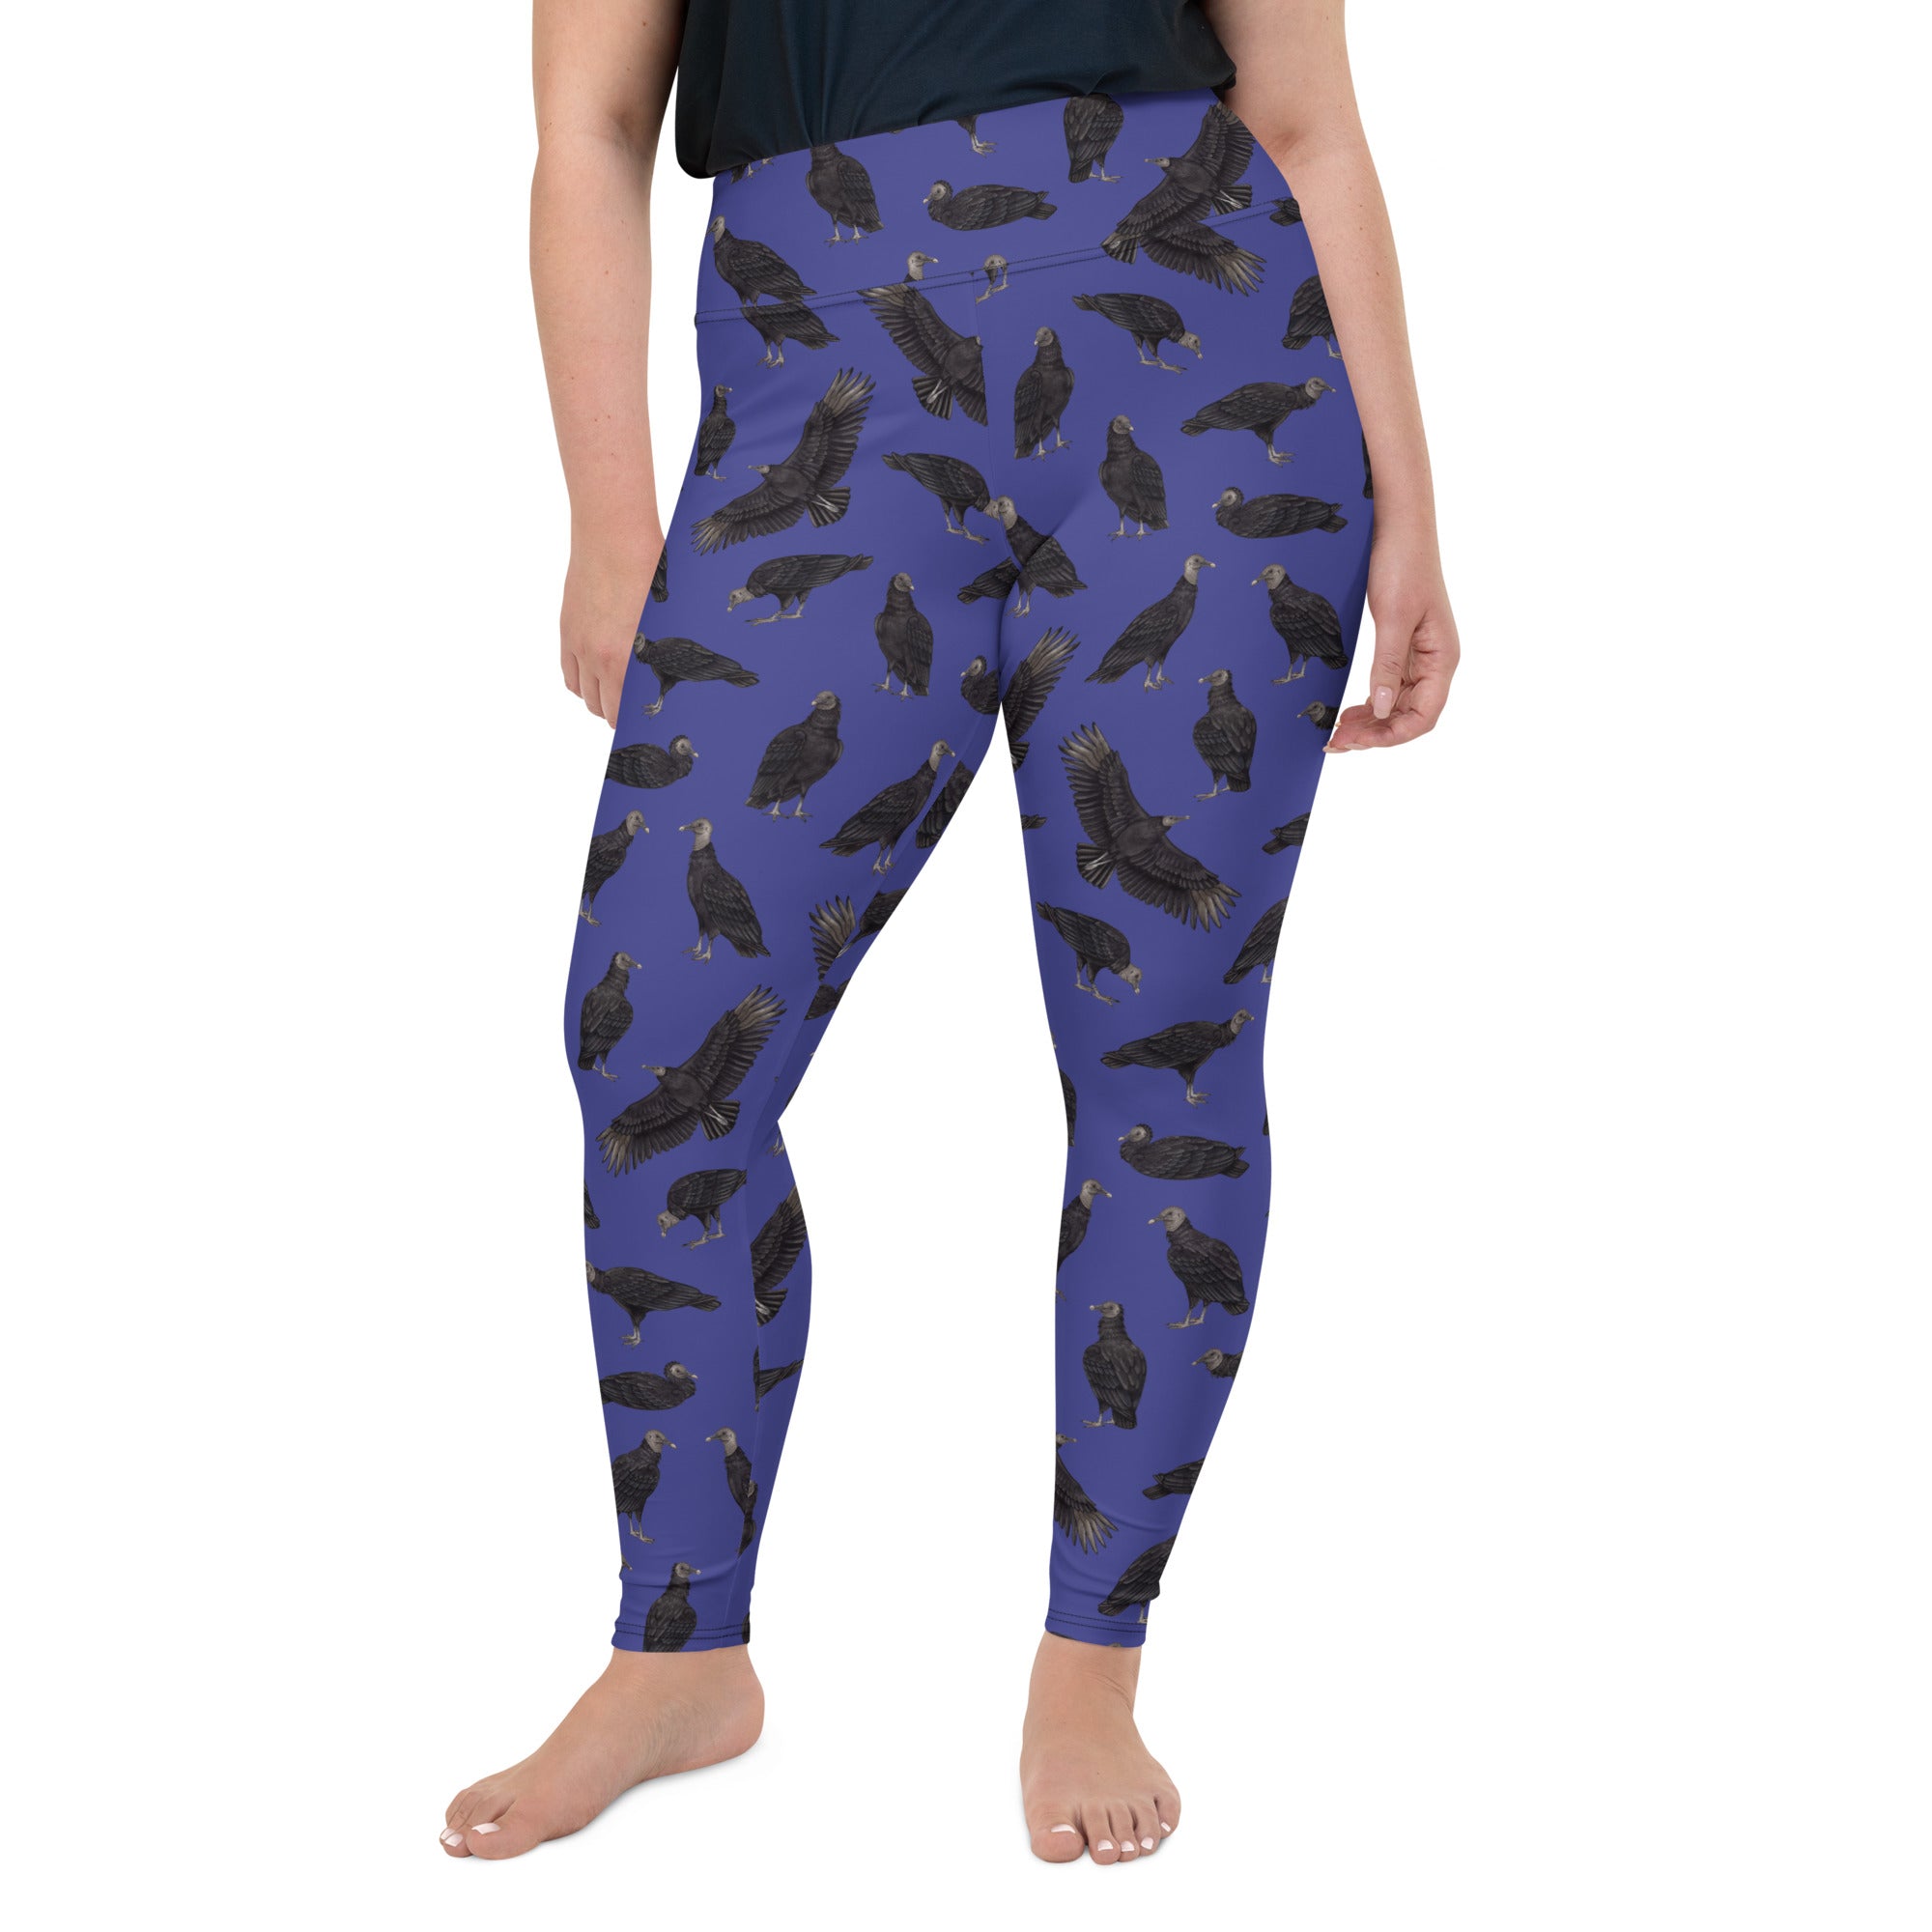 LuLaroe Leggings, purple, polyester/spandex blend, One size